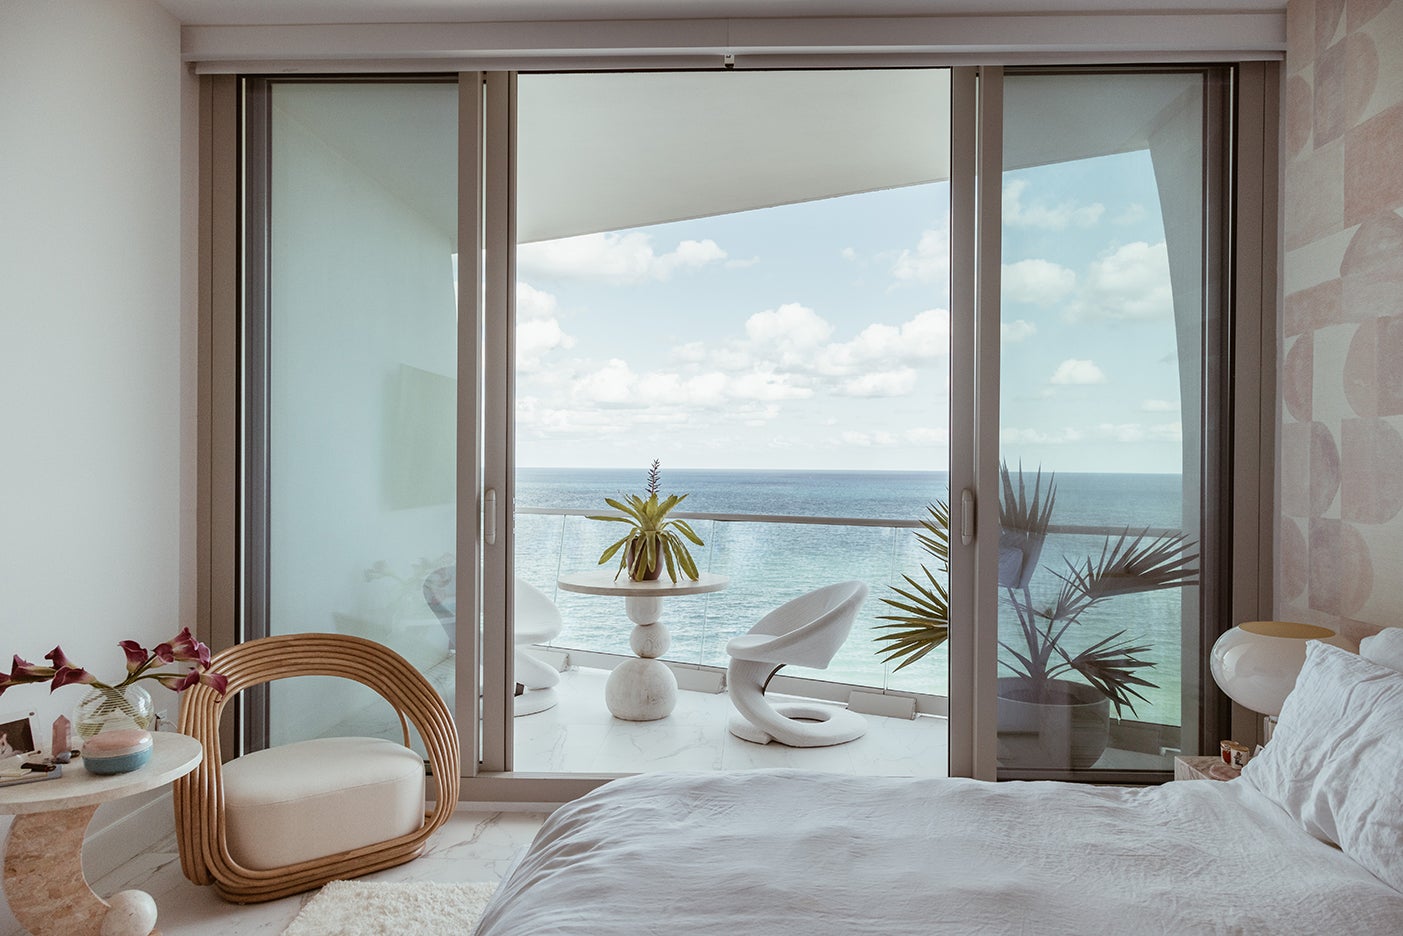 view from bedroom to balcony facing ocean